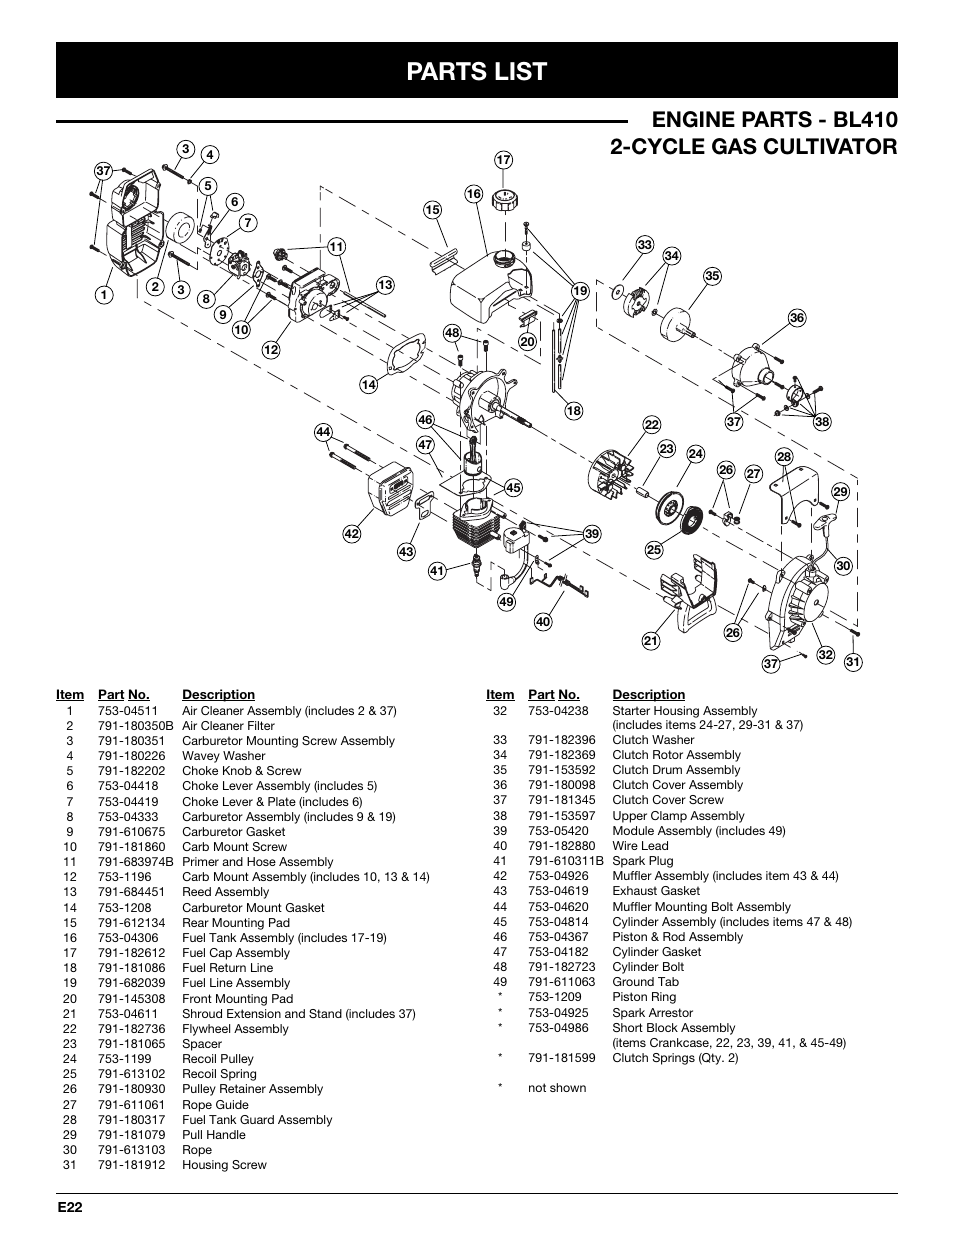 Parts list, Engine parts - bl410 2-cycle gas cultivator | Bolens BL410 ...